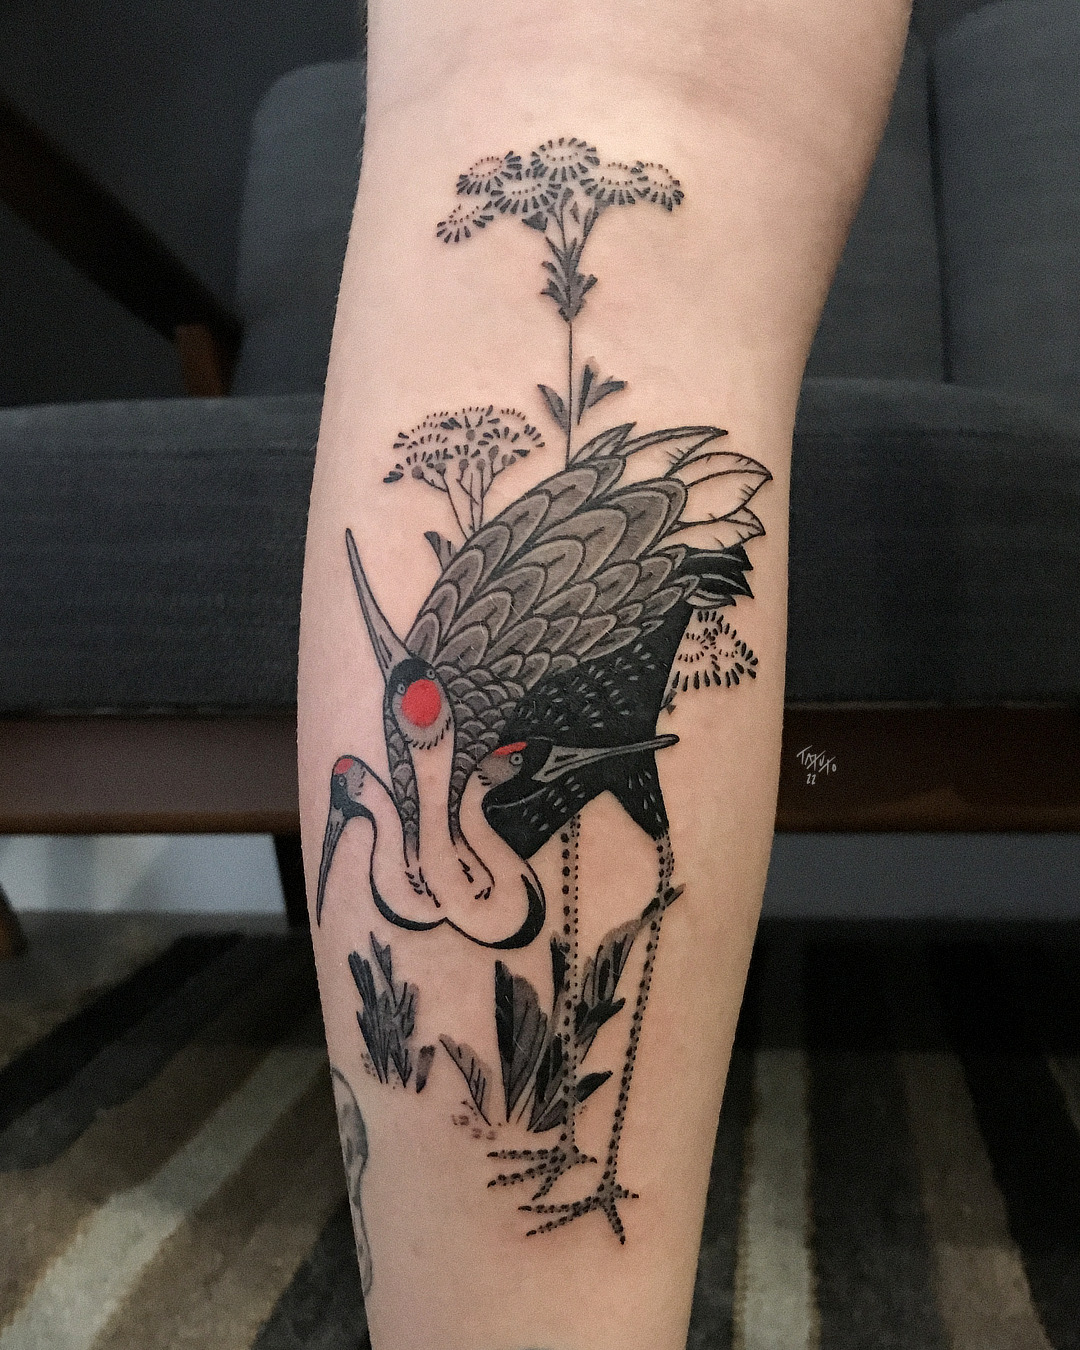 nico-tatuto-tattoo-bordeaux-flash-bastide-tatoueur-grue-crane-japonais-japanese-black-fineline-floral-botanical-meilleur-2